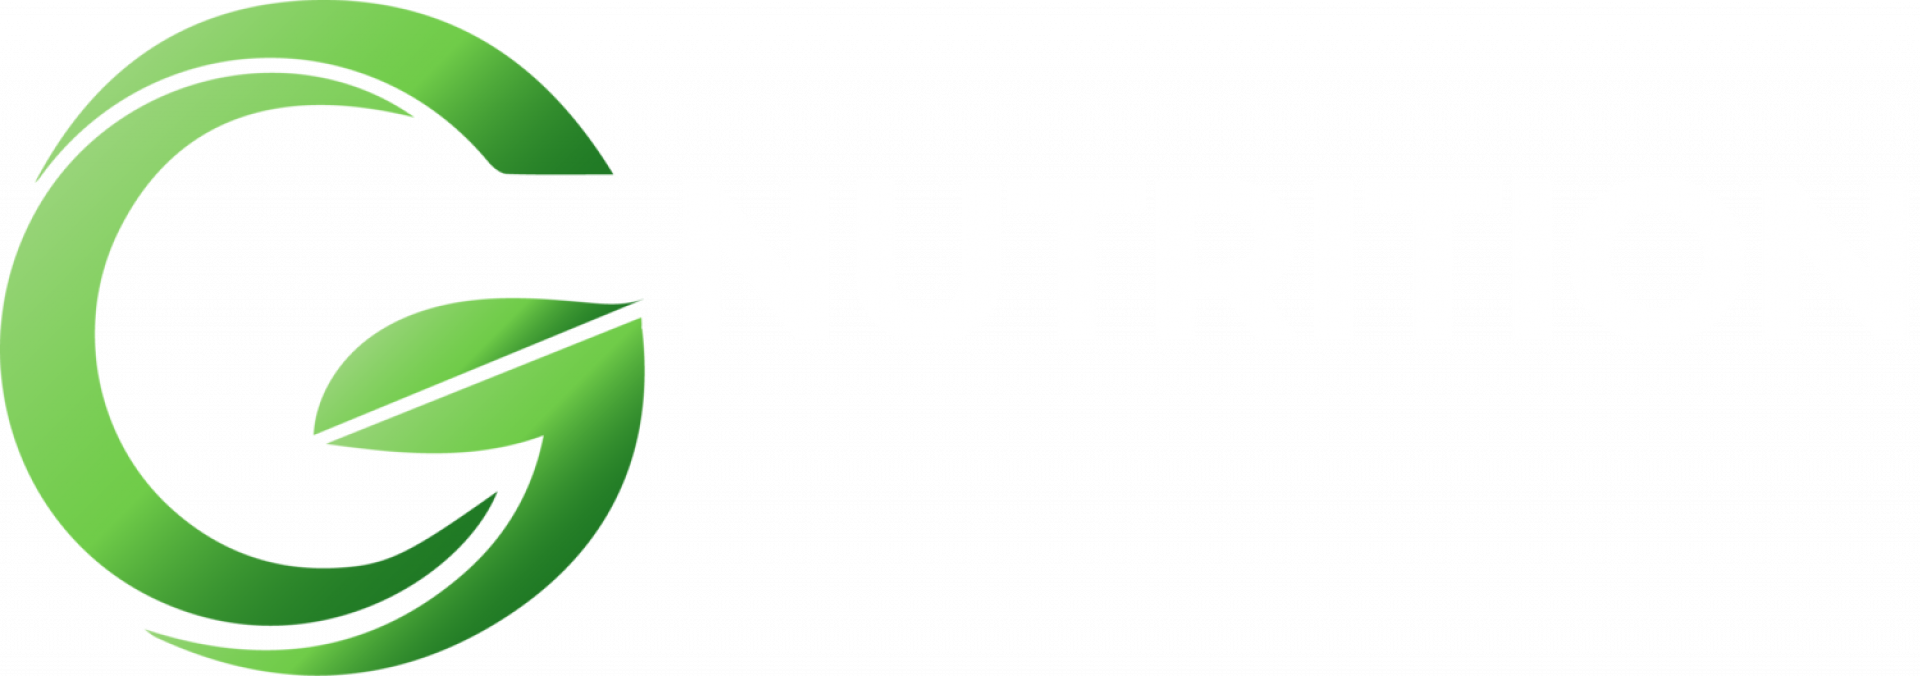 G Nutrition logo